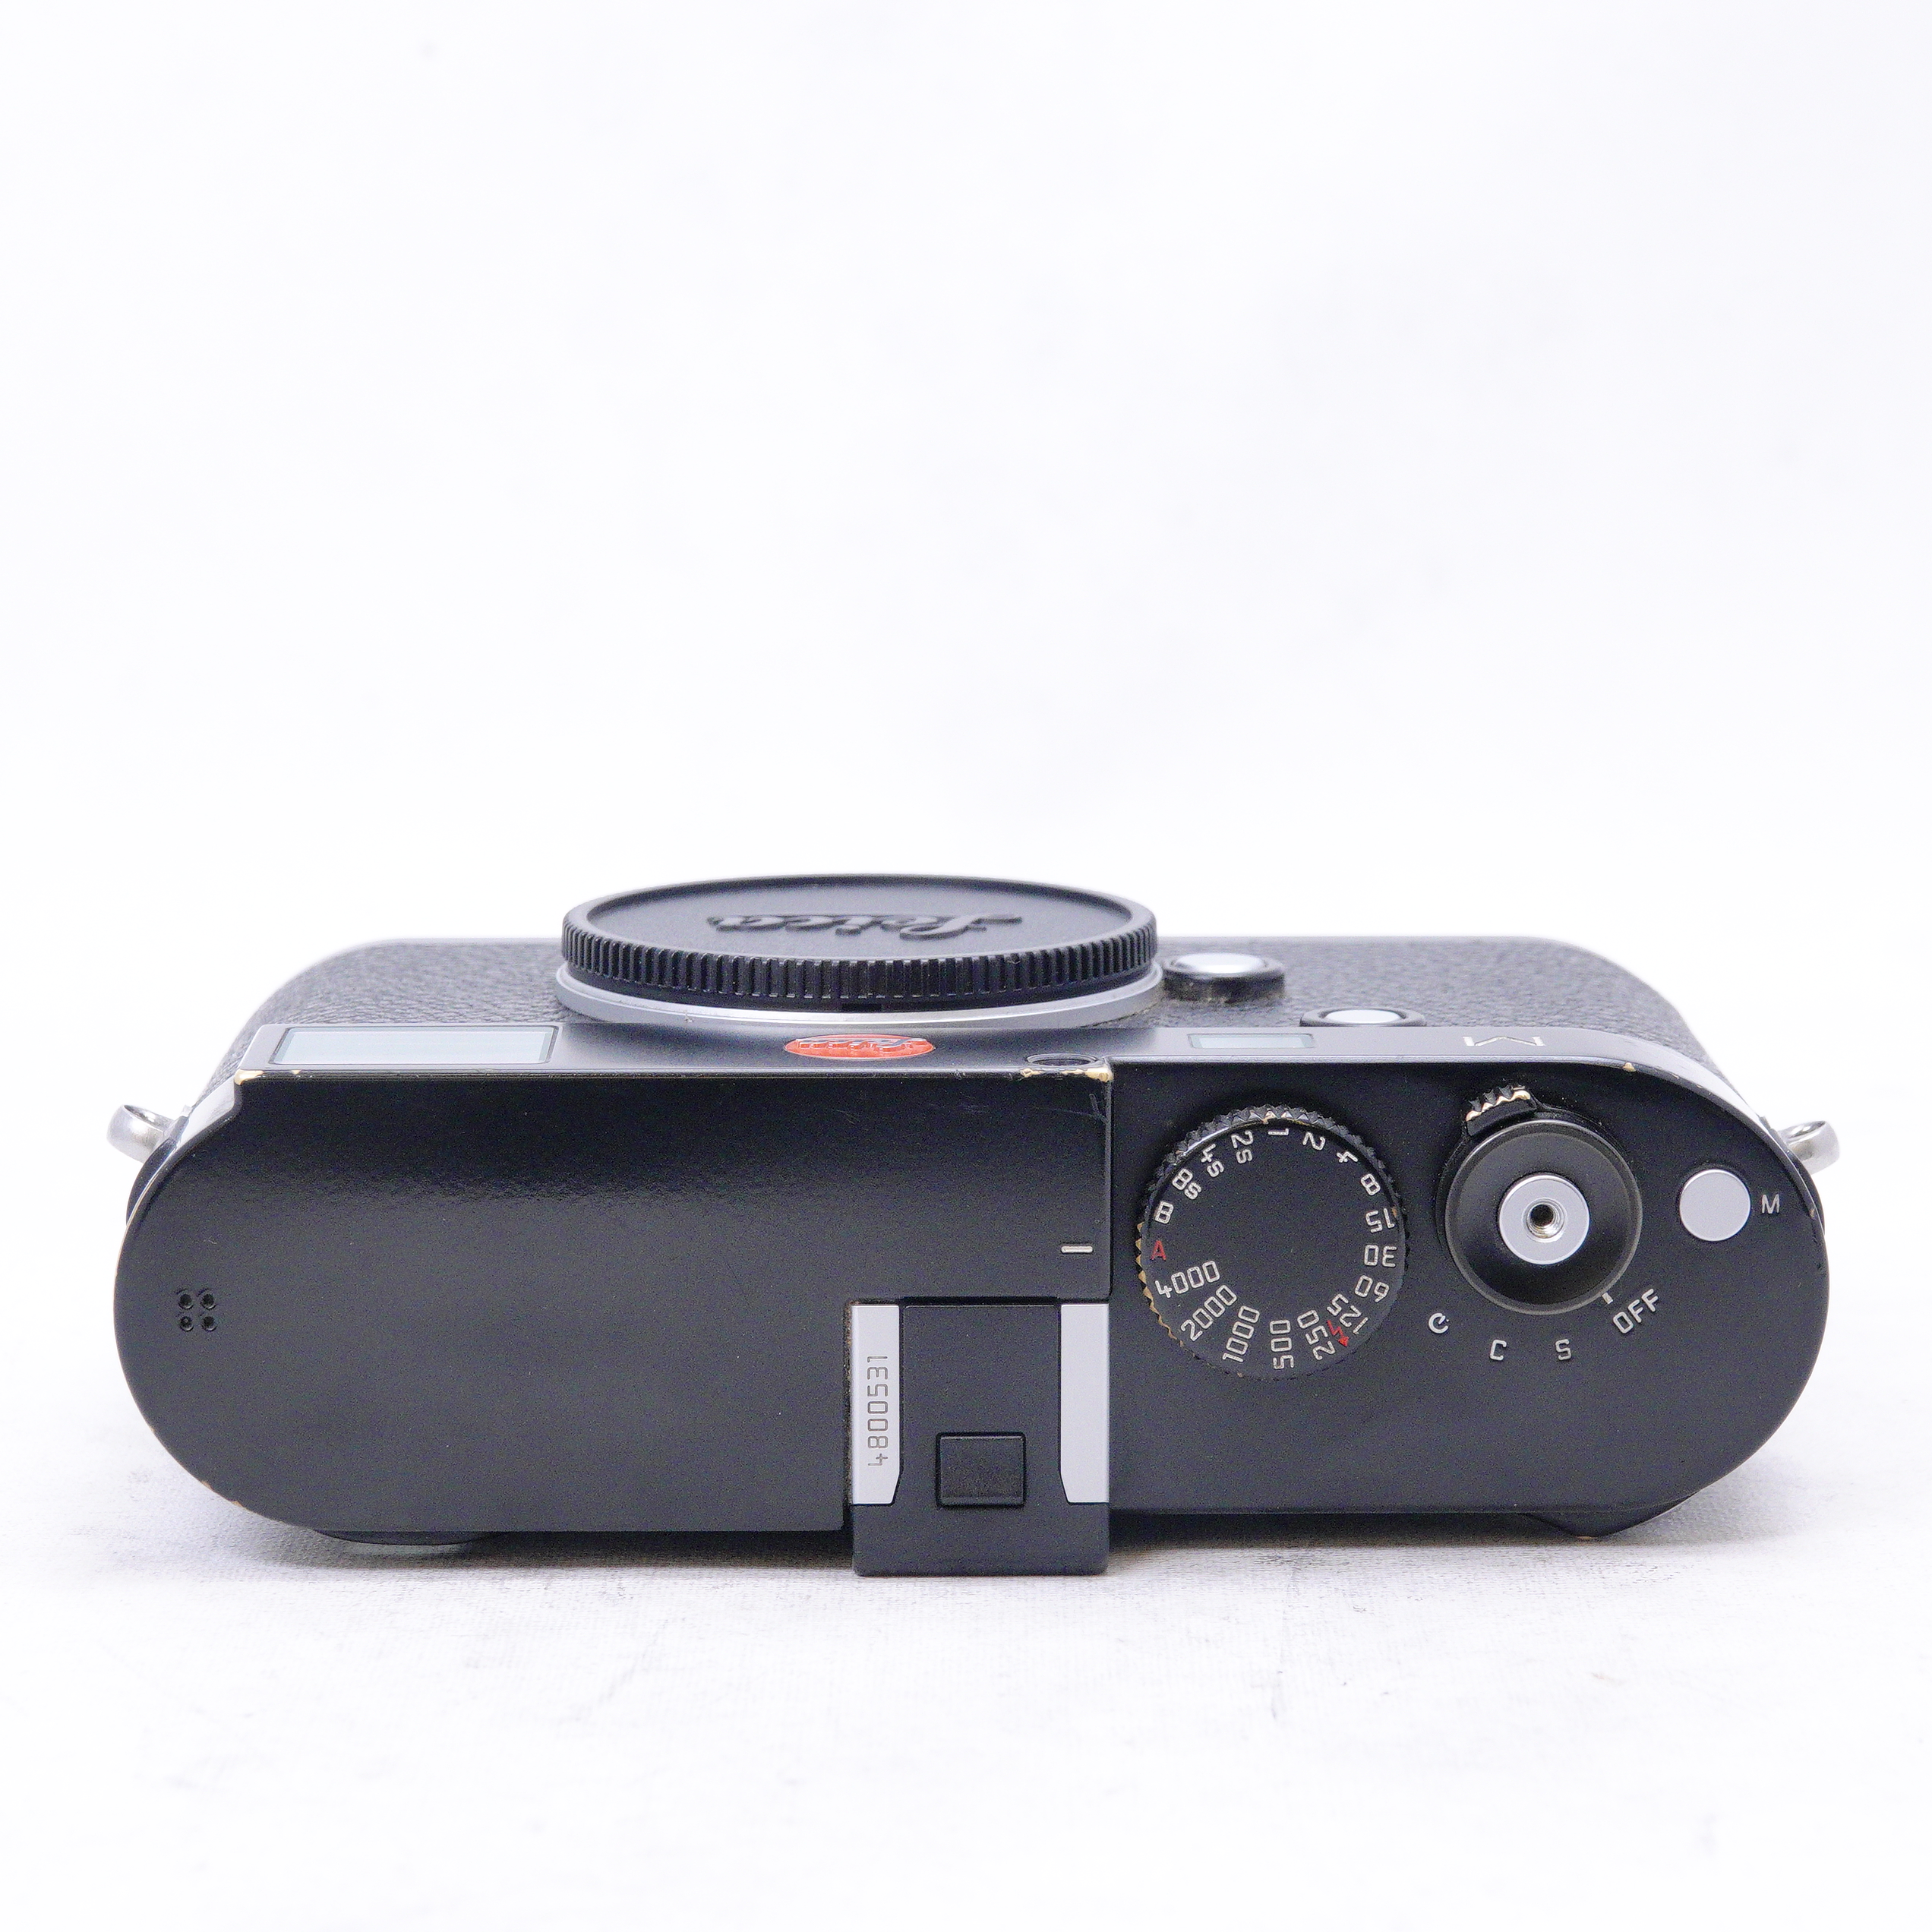 Leica M (Typ 240) Digital Rangefinder Camera - Usado